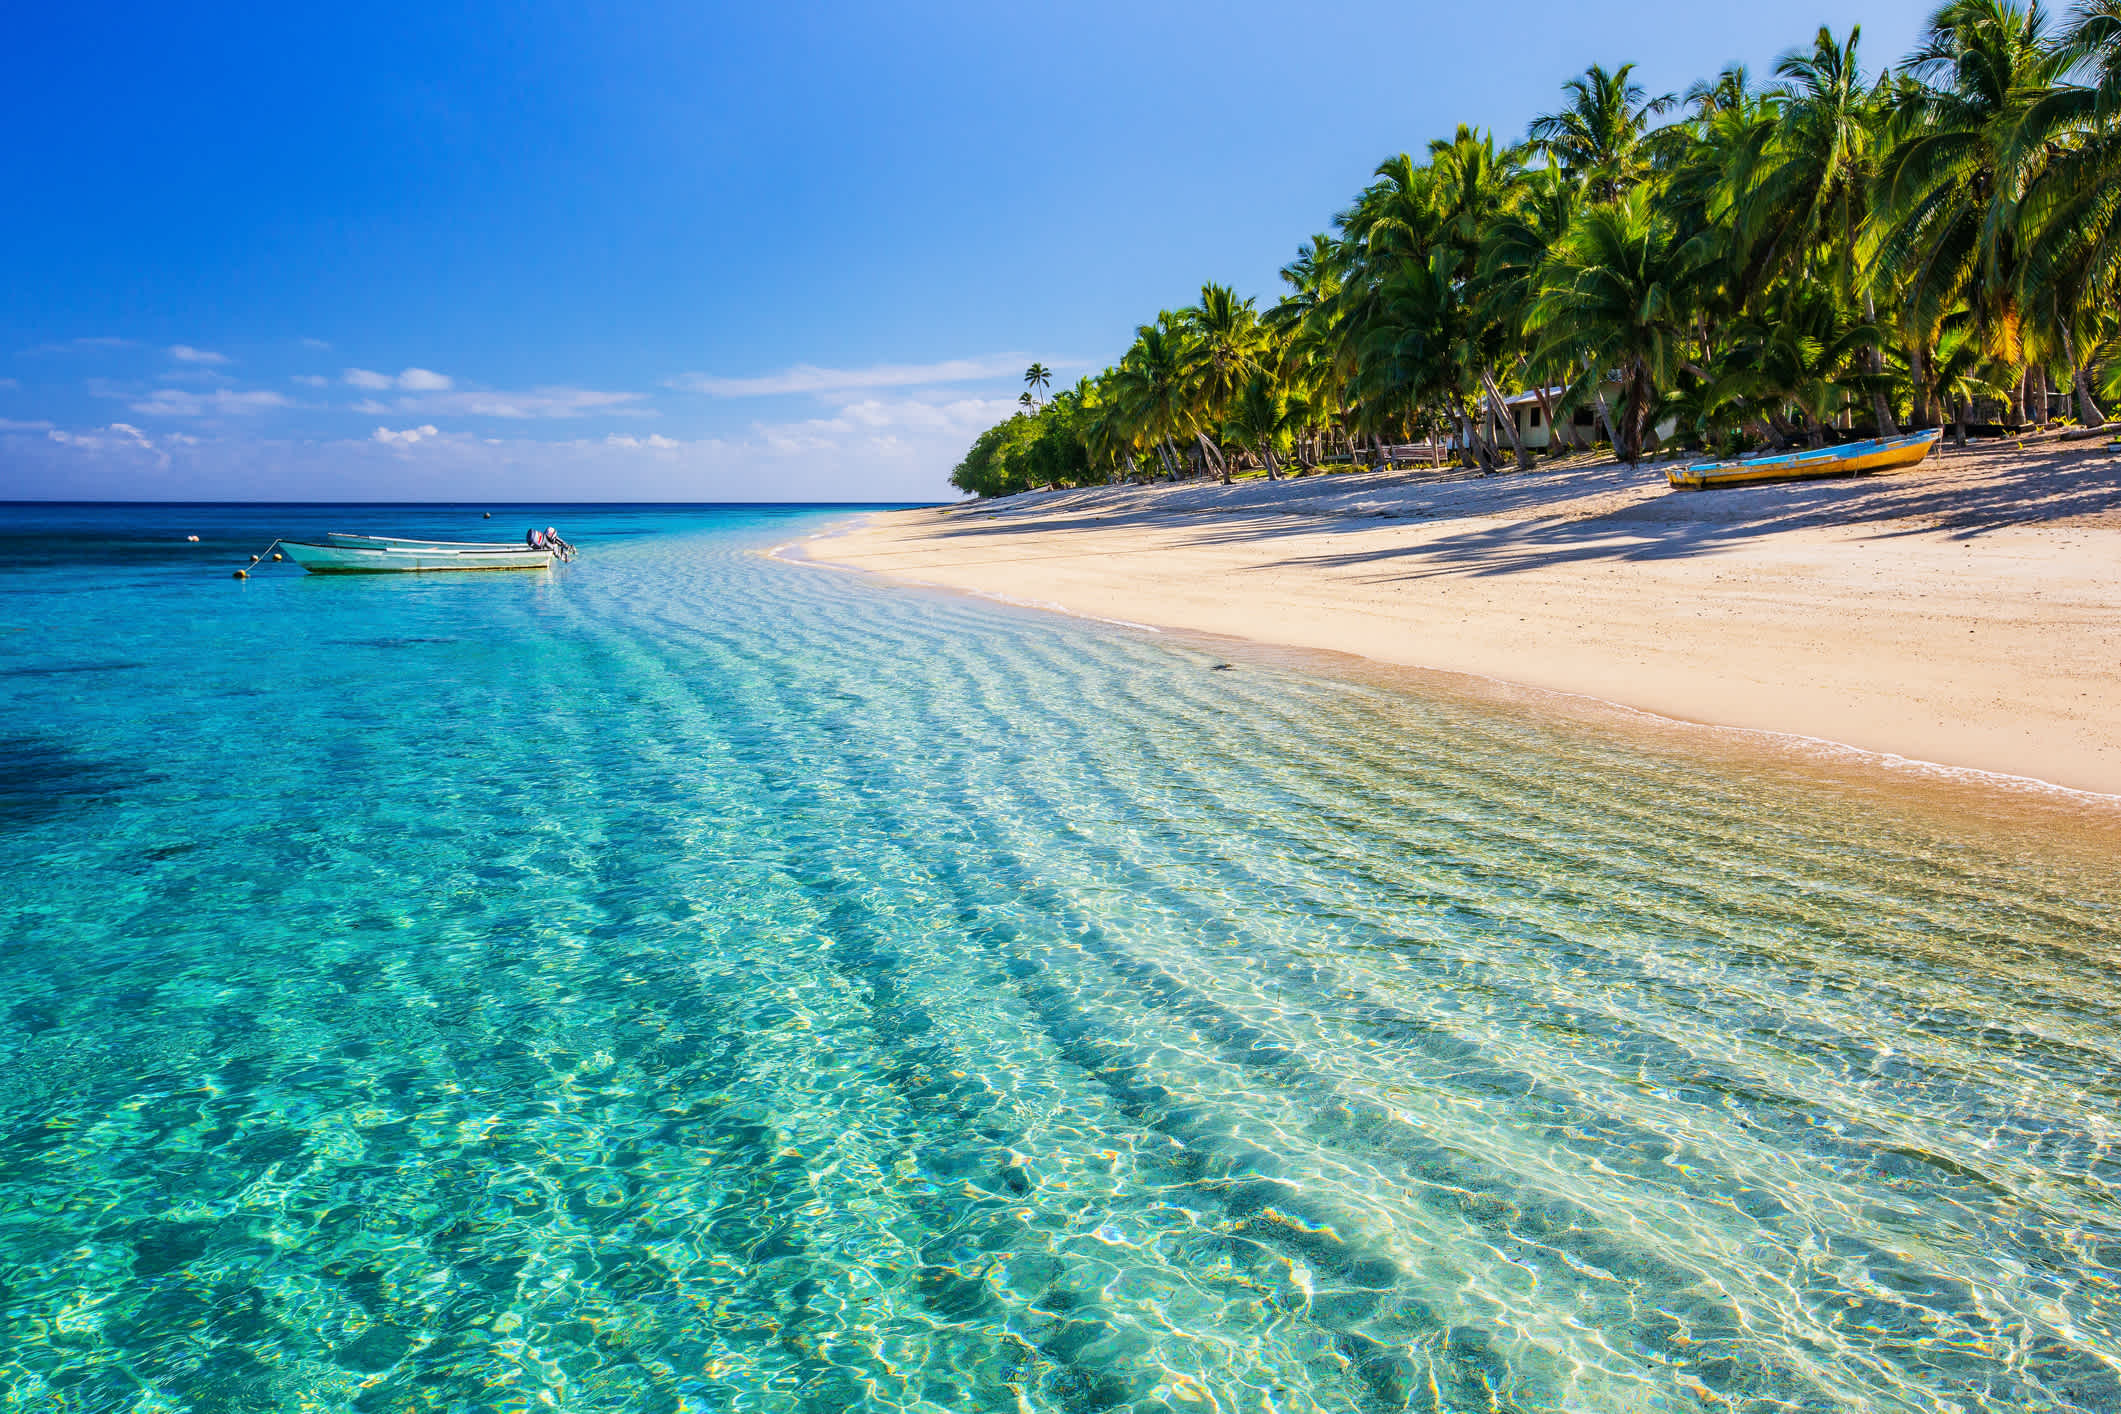 Beach of the Fiji Islands